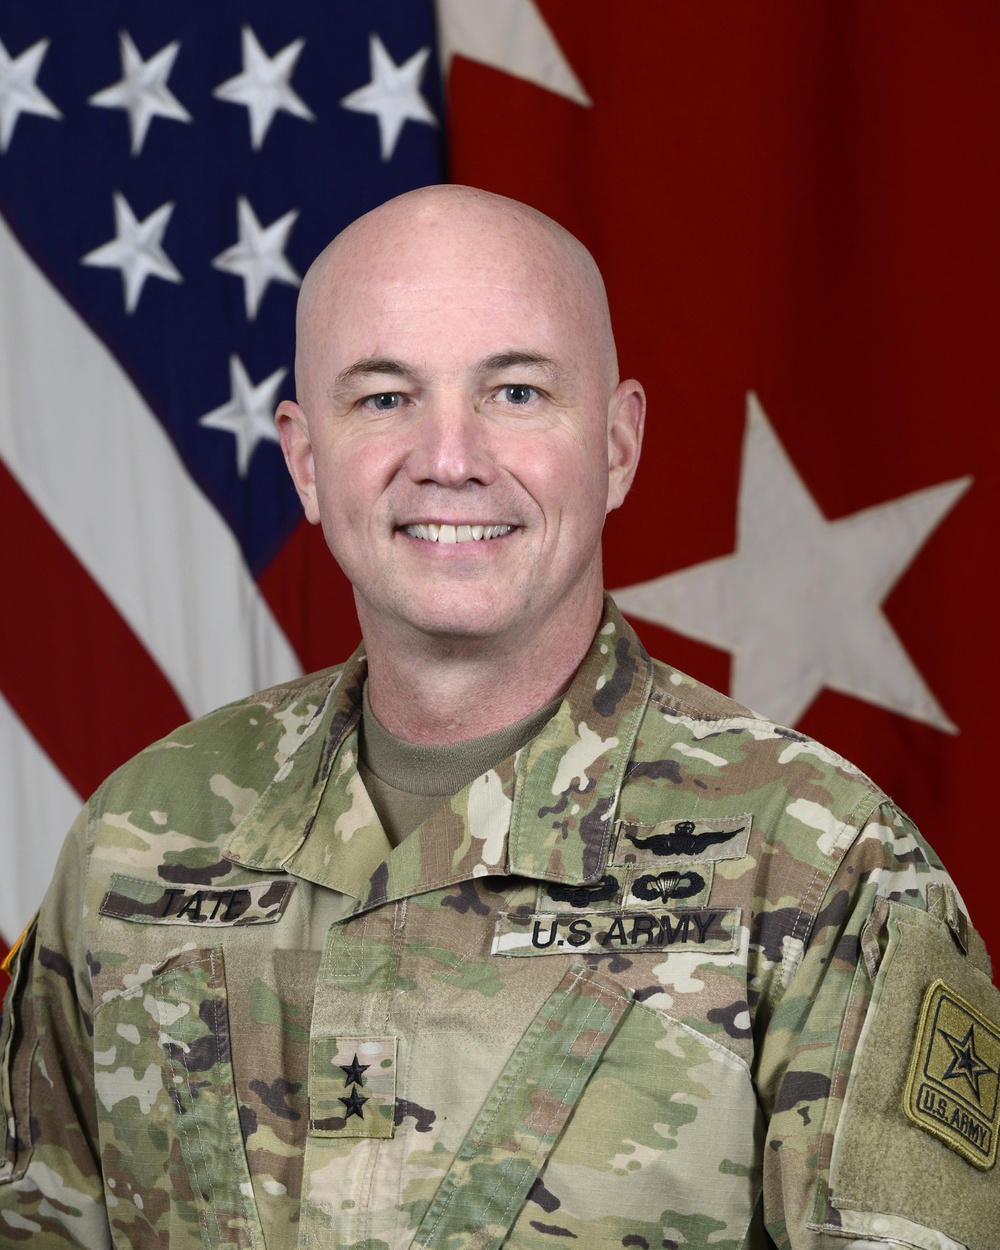 U.S. Army Maj. Gen. Frank W. Tate